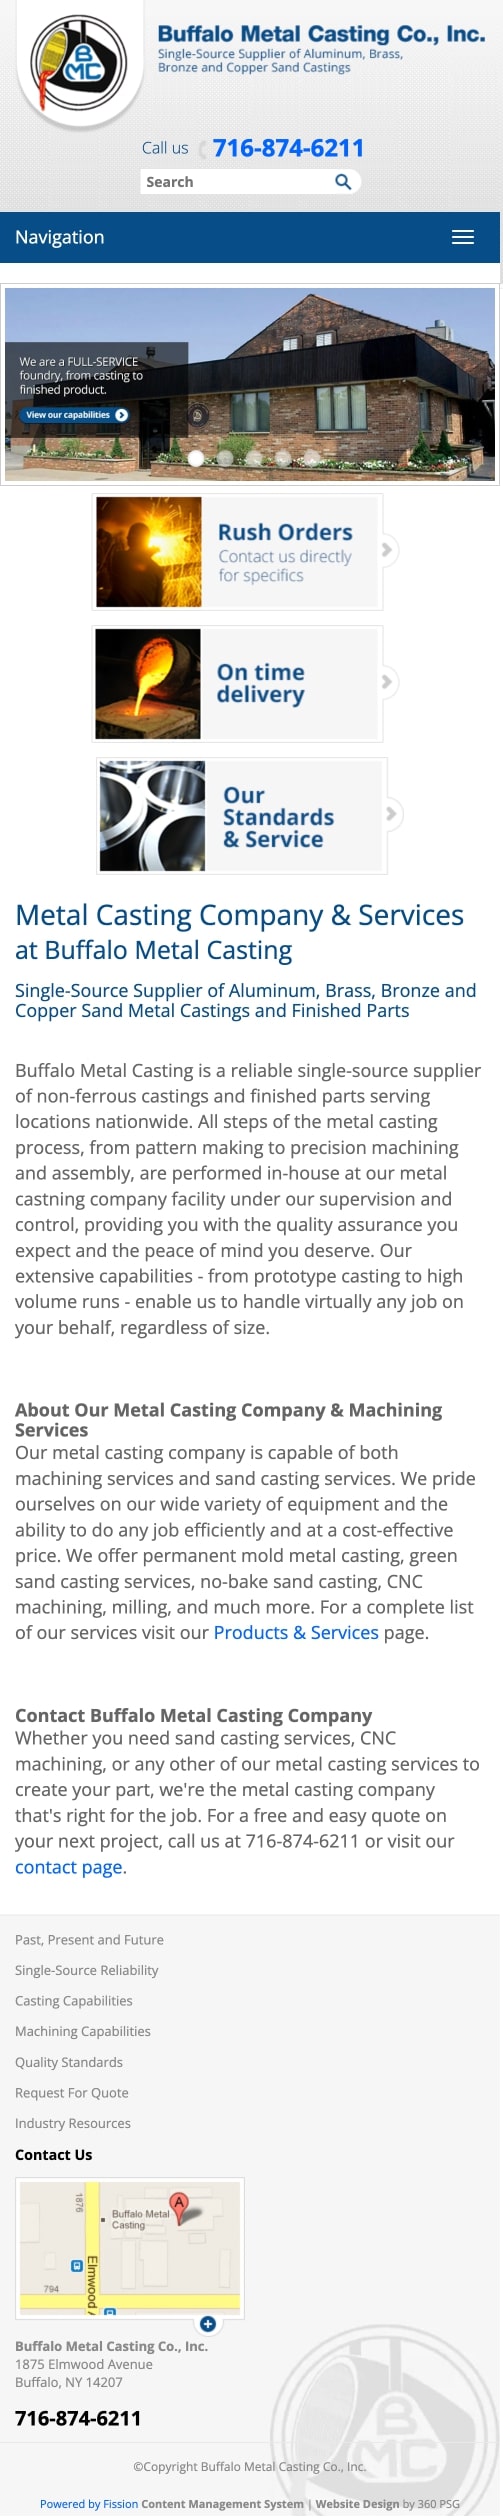 Buffalo Metal Casting Website - Mobile